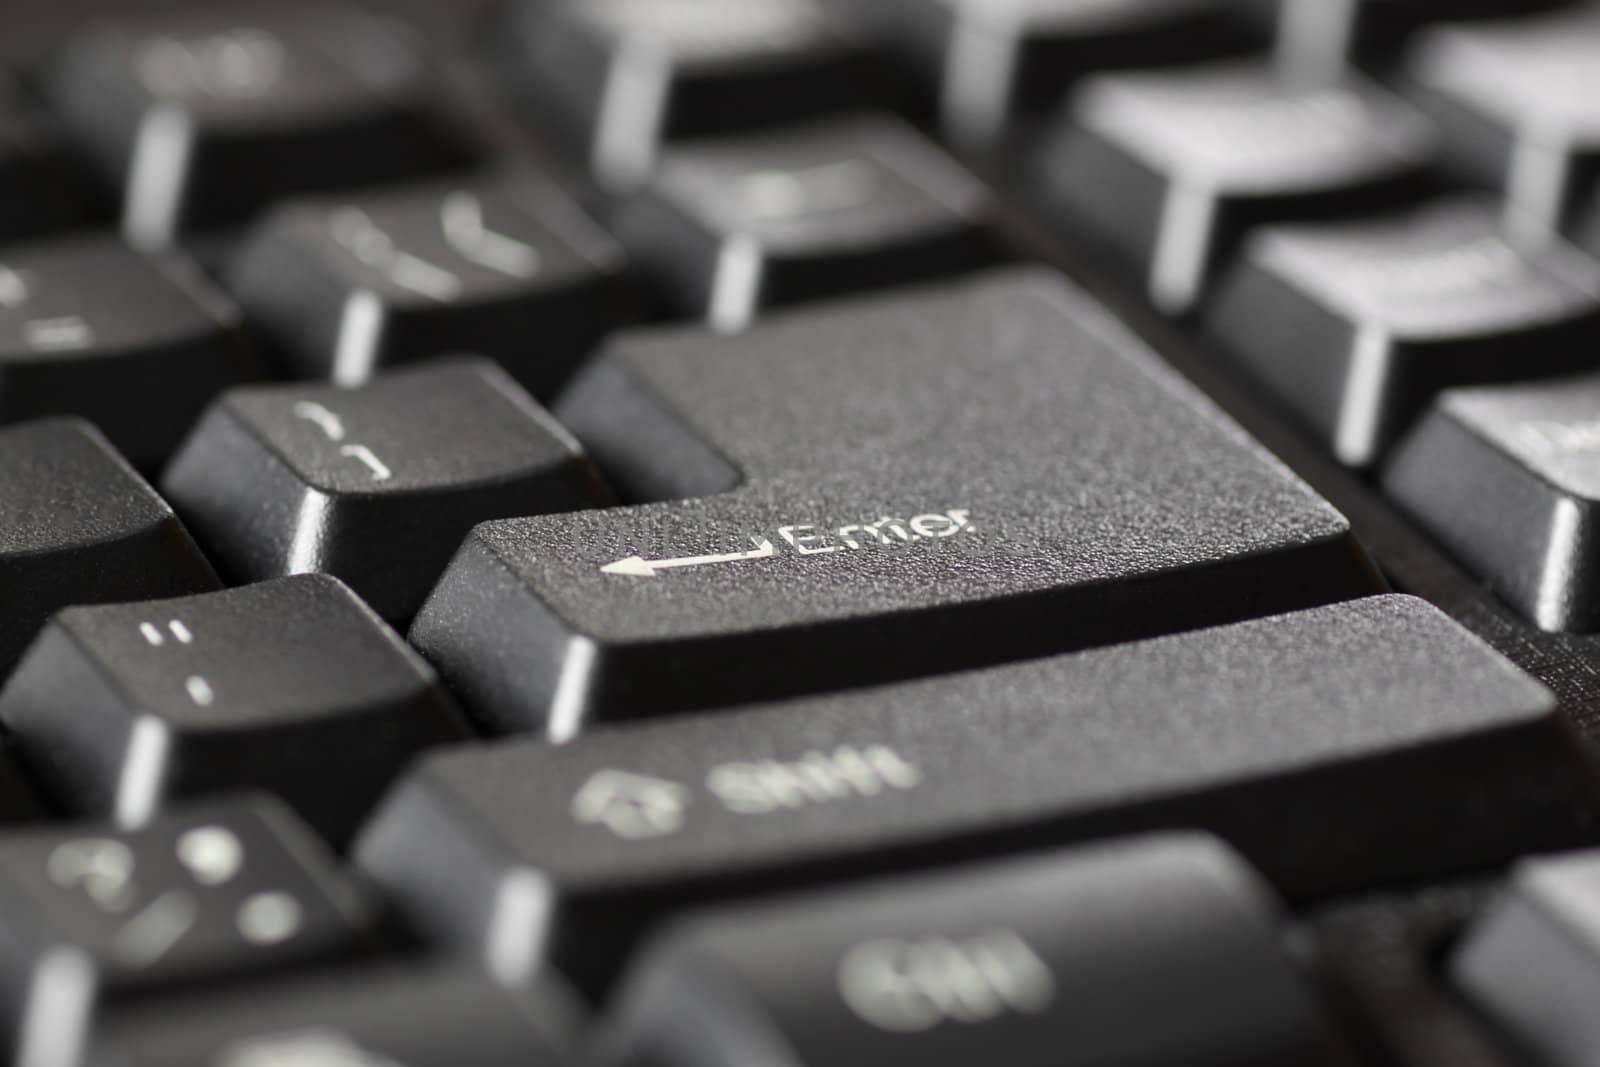 close up of Enter key on keyboard